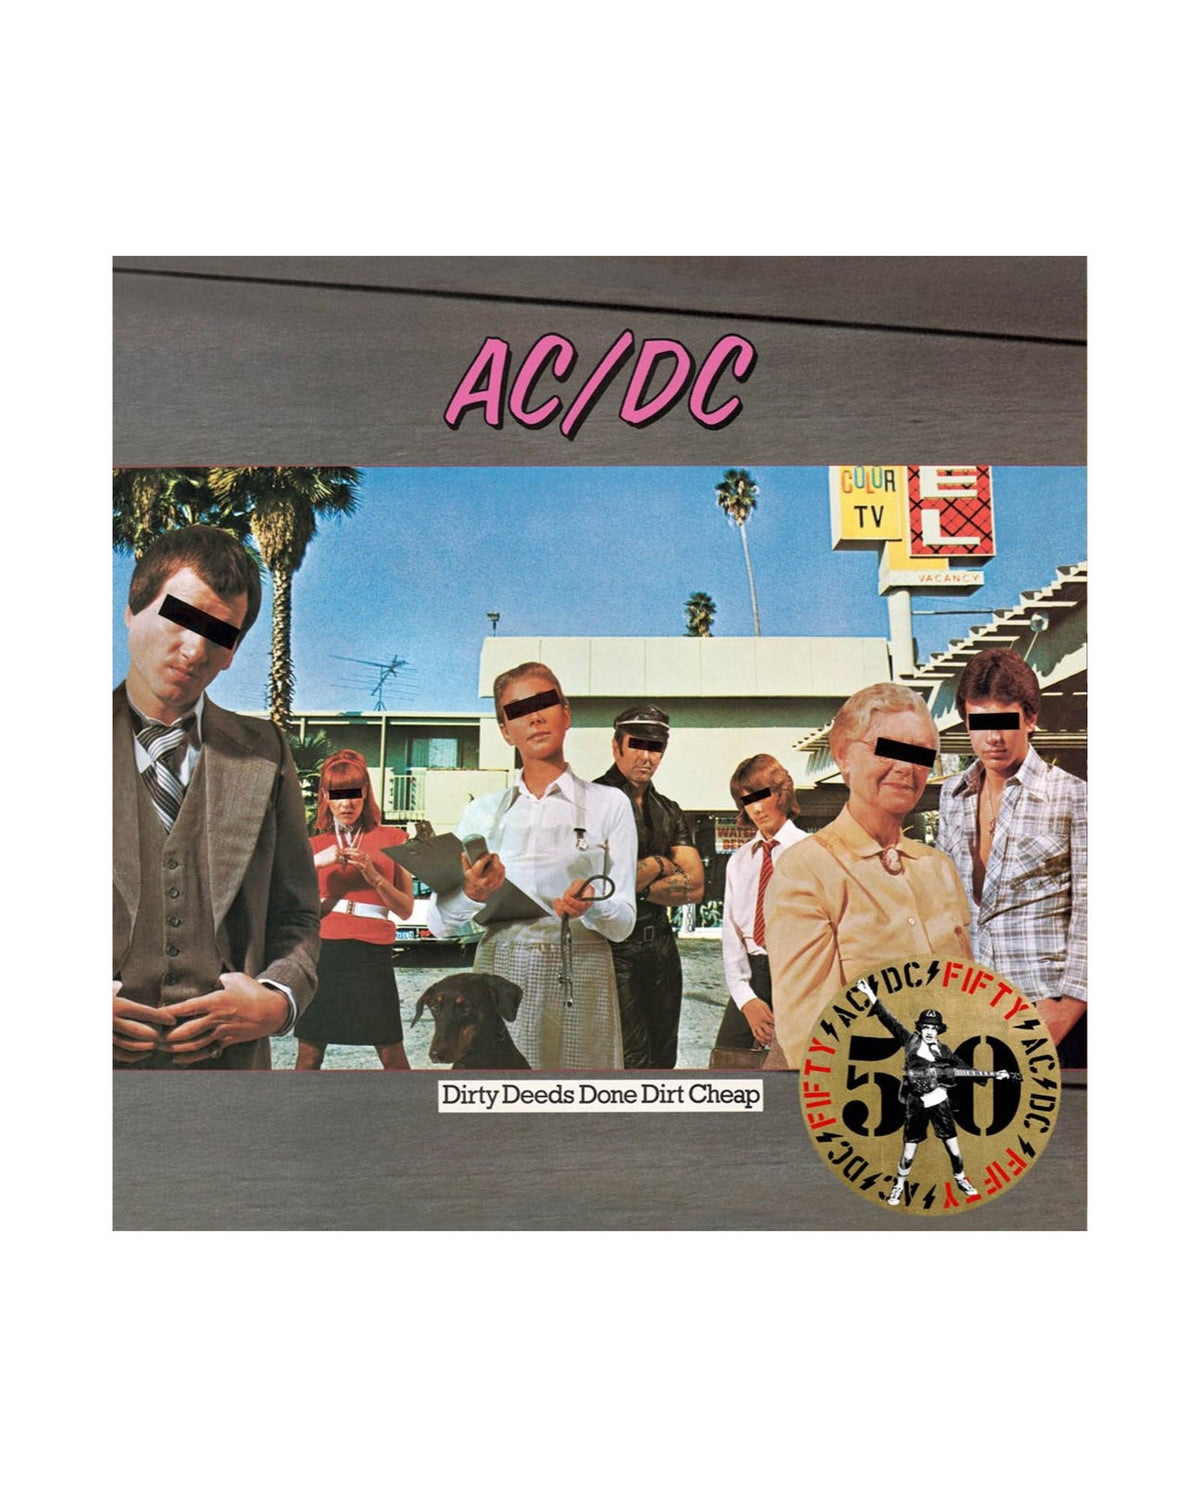 AC/DC - LP Vinilo Dorado "Dirty Deeds Done Dirt Cheap" Ed. 50 aniversario - D2fy · Rocktud - Rocktud